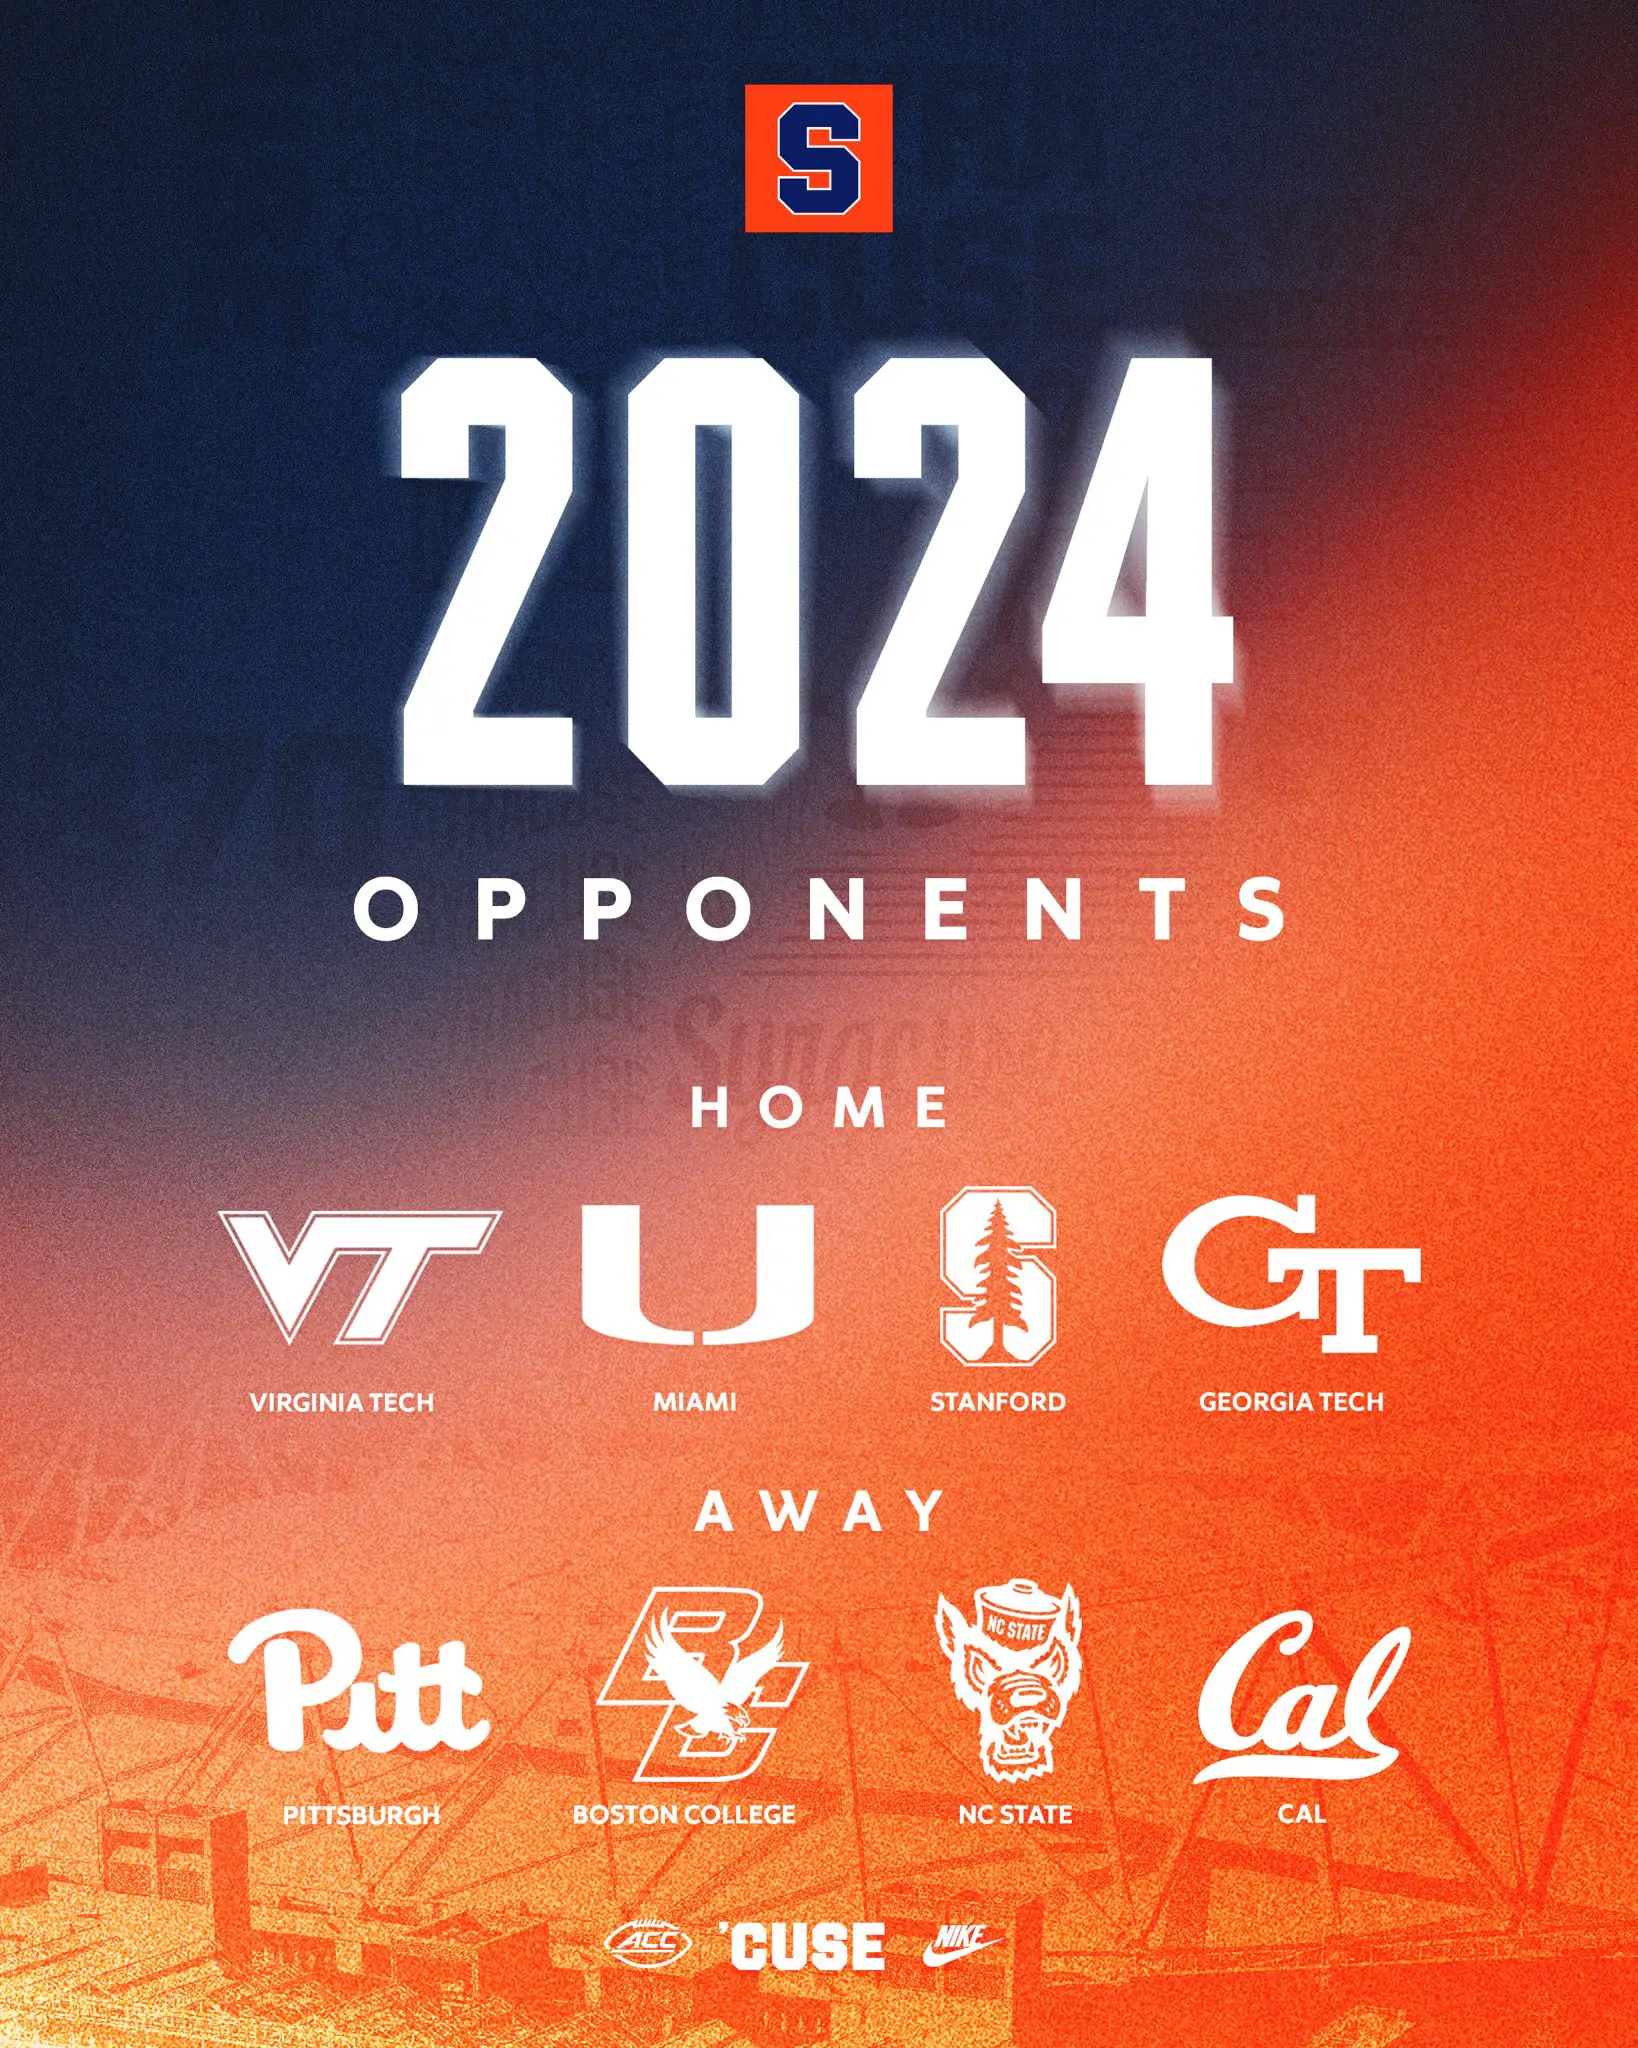 Syracuse Football Schedule Through 2030 Announced